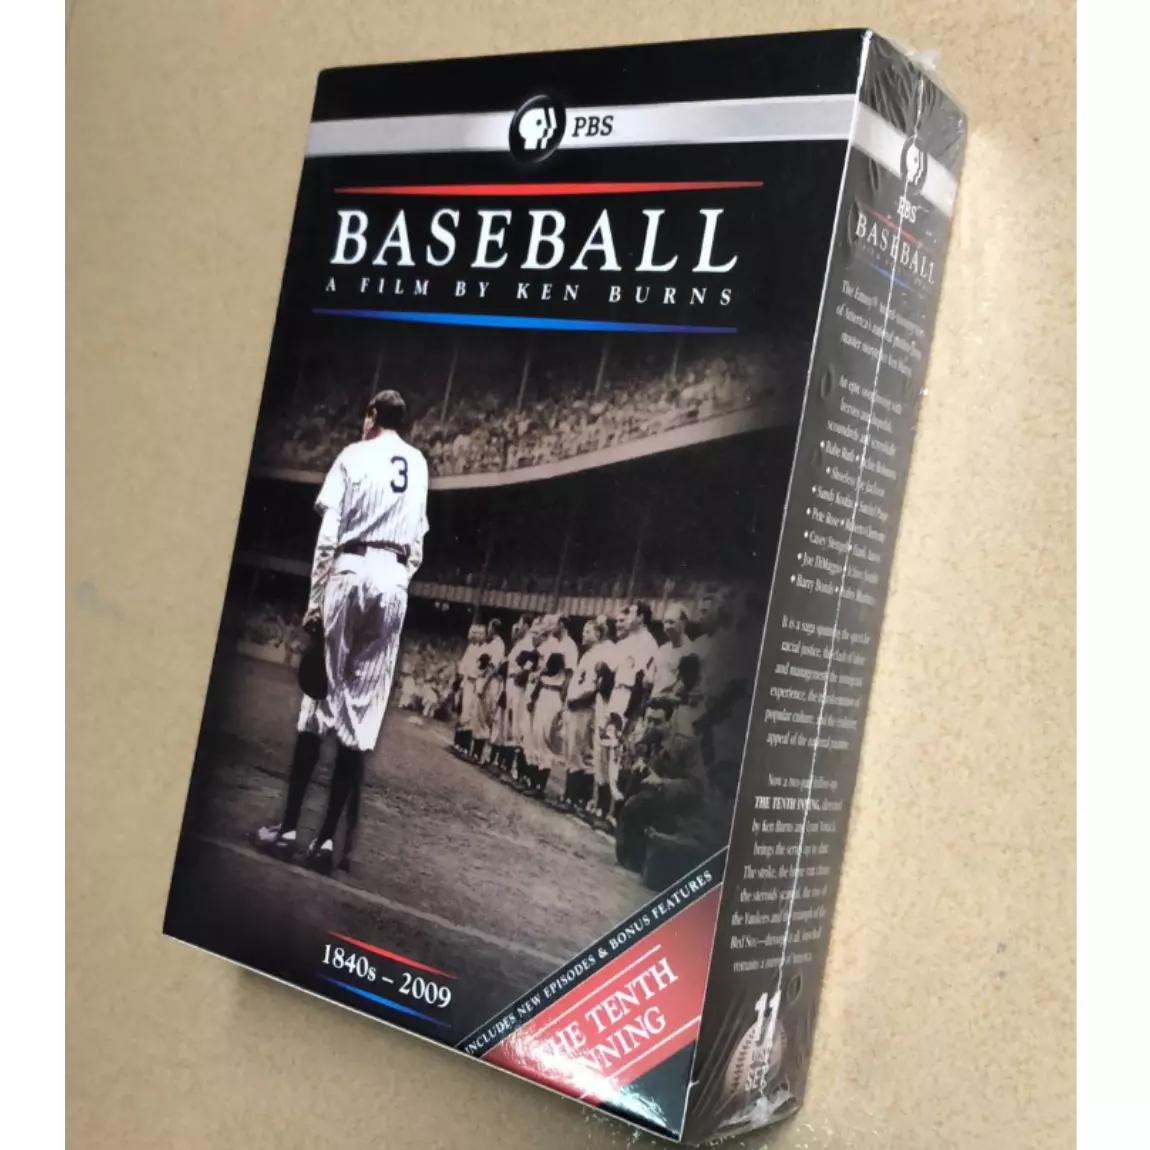 Baseball A Film by Ken Burns (DVD, 11-Disc Set) Brand New** eBay